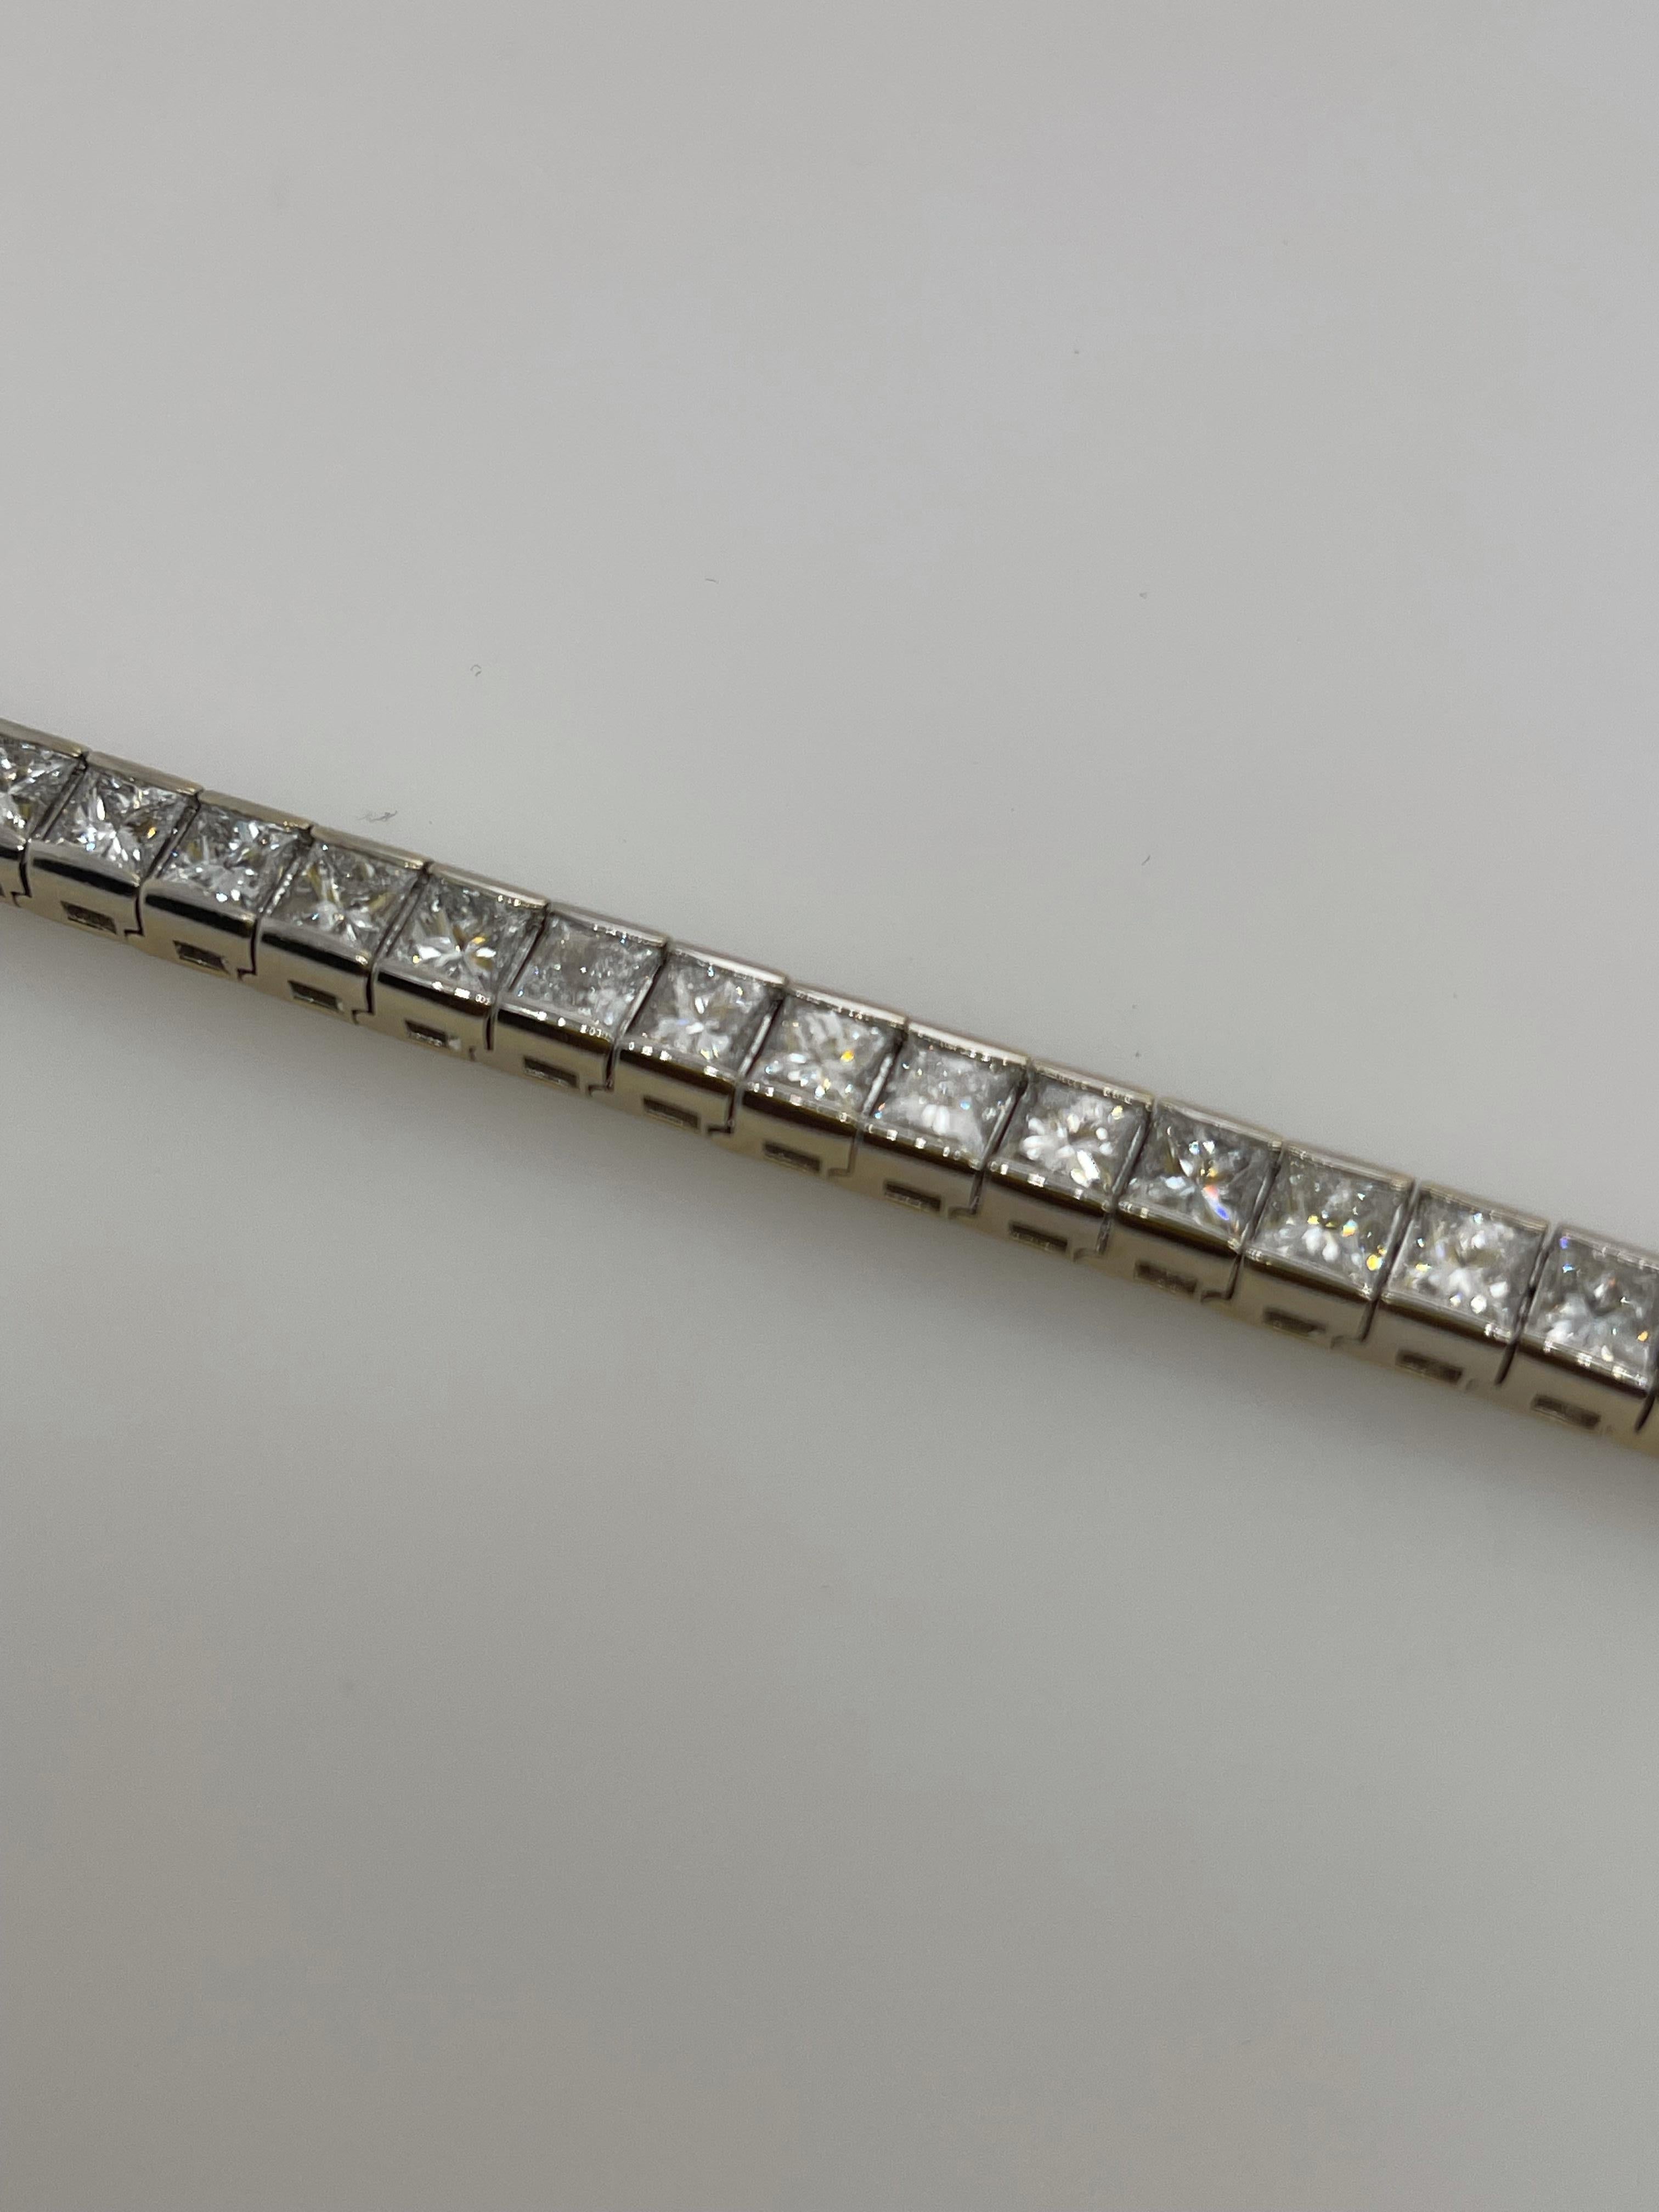 diamond bracelet chanel